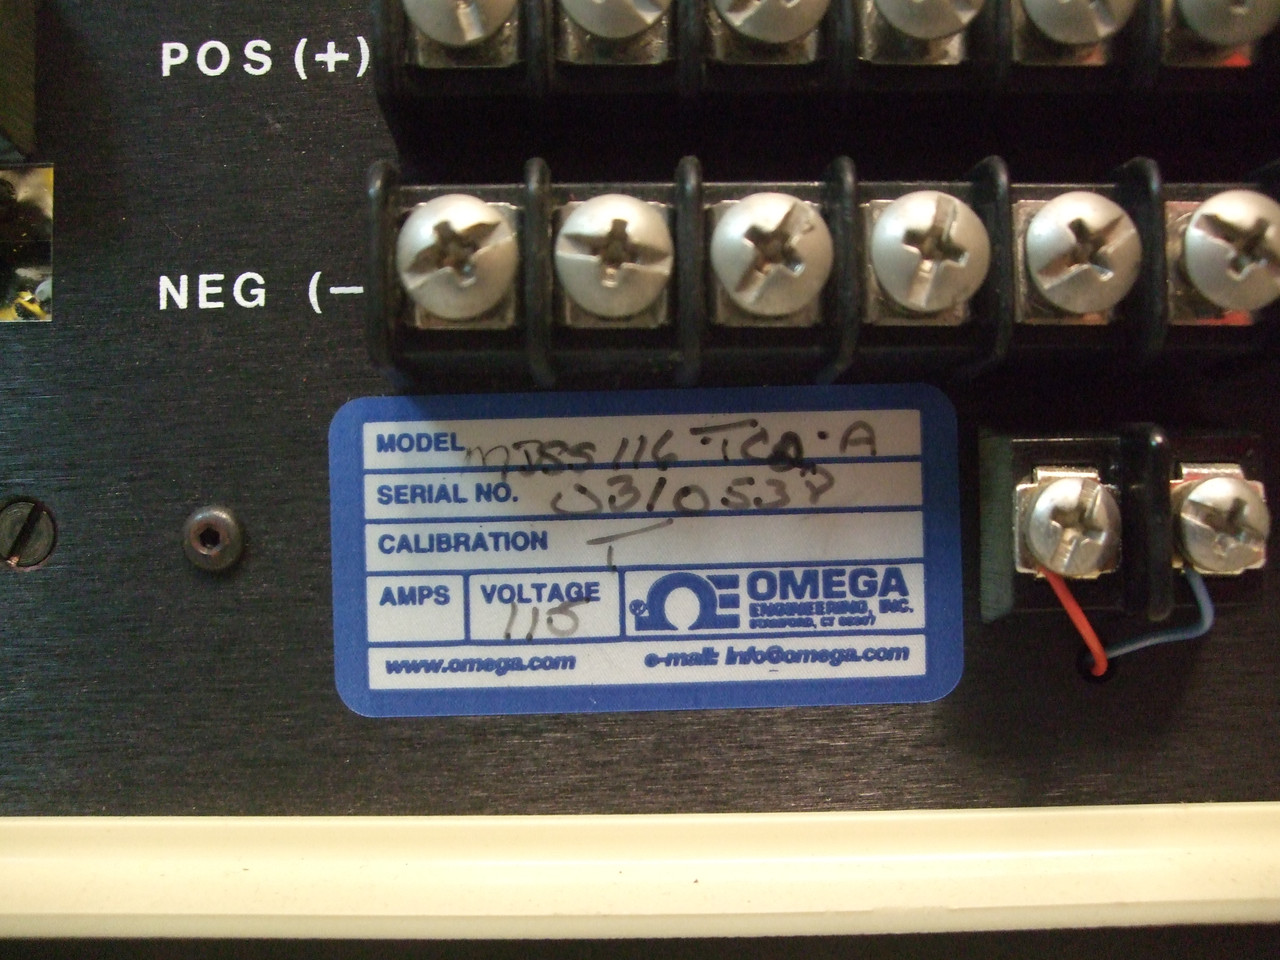 Omega Monogram MDSS 116 TC 2 A Temperature Panel Meter